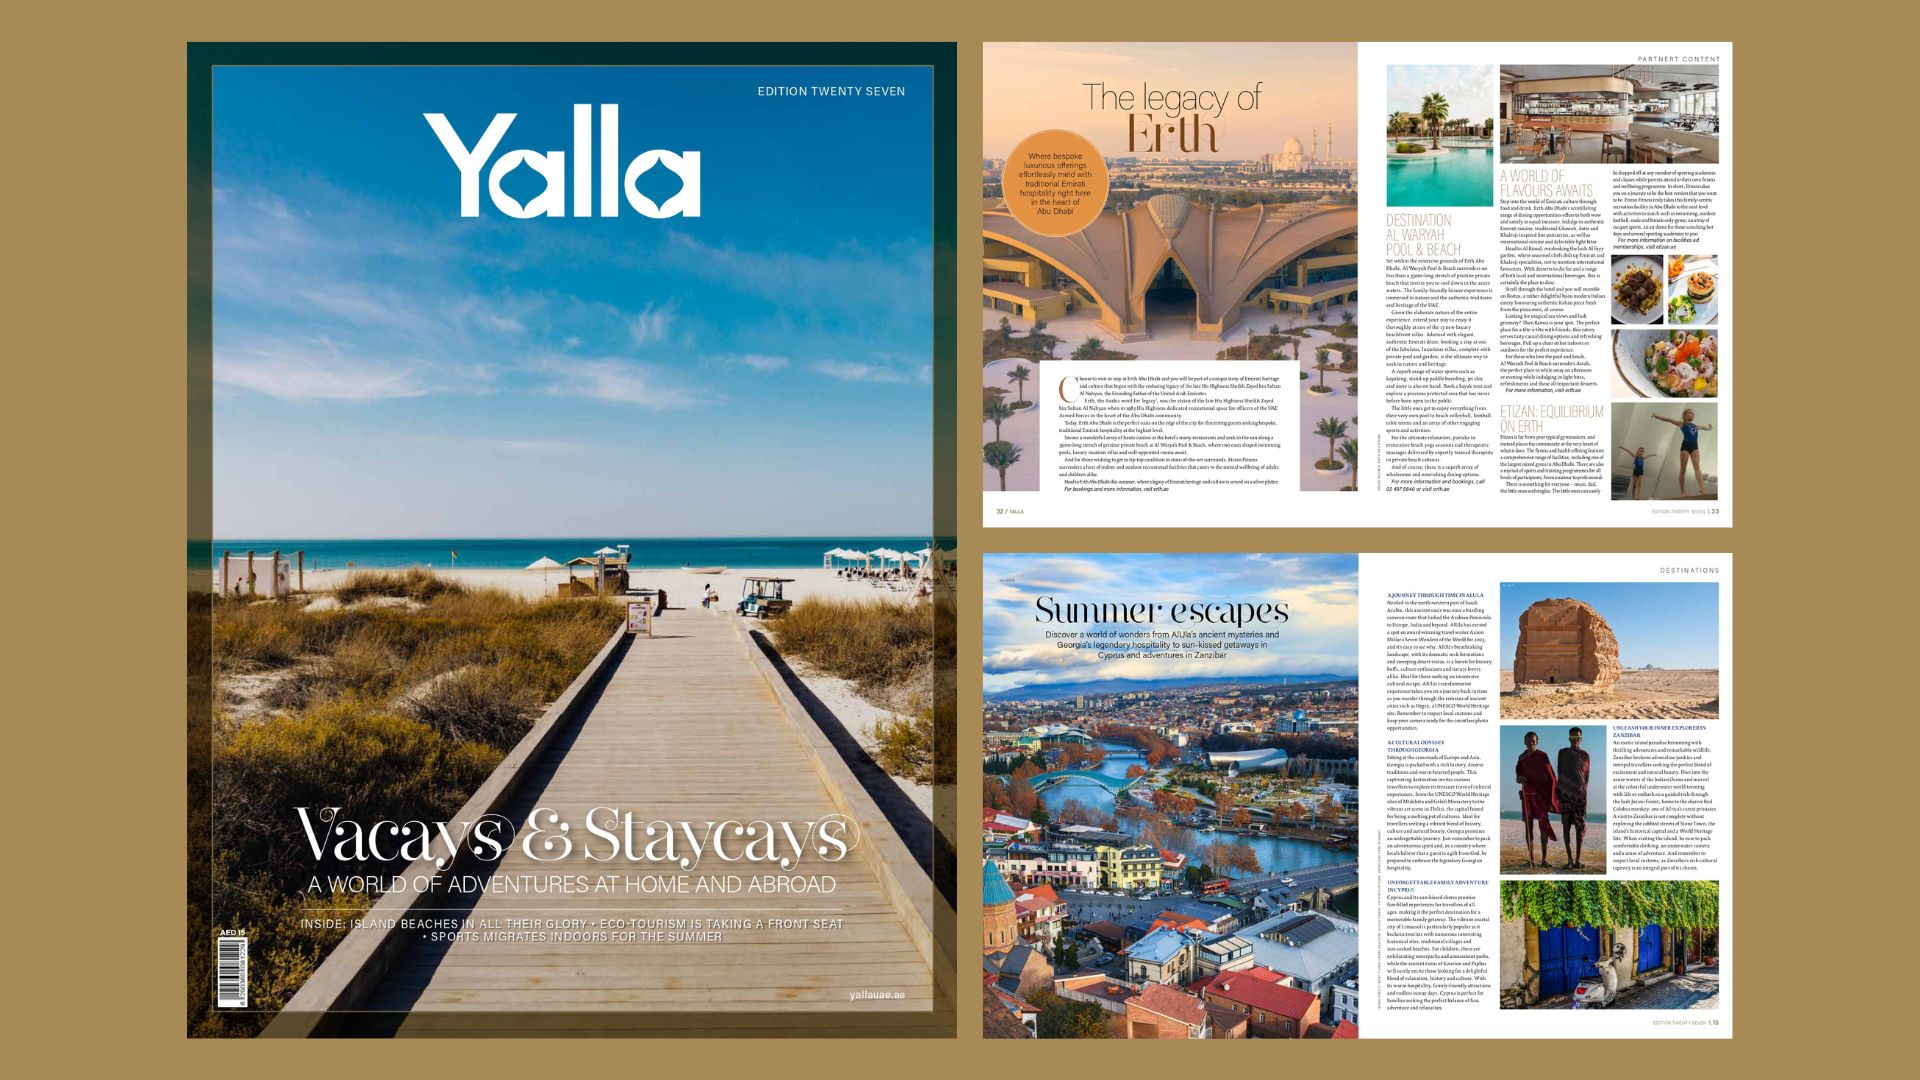 Yalla - Abu Dhabi Life Magazine edition 27